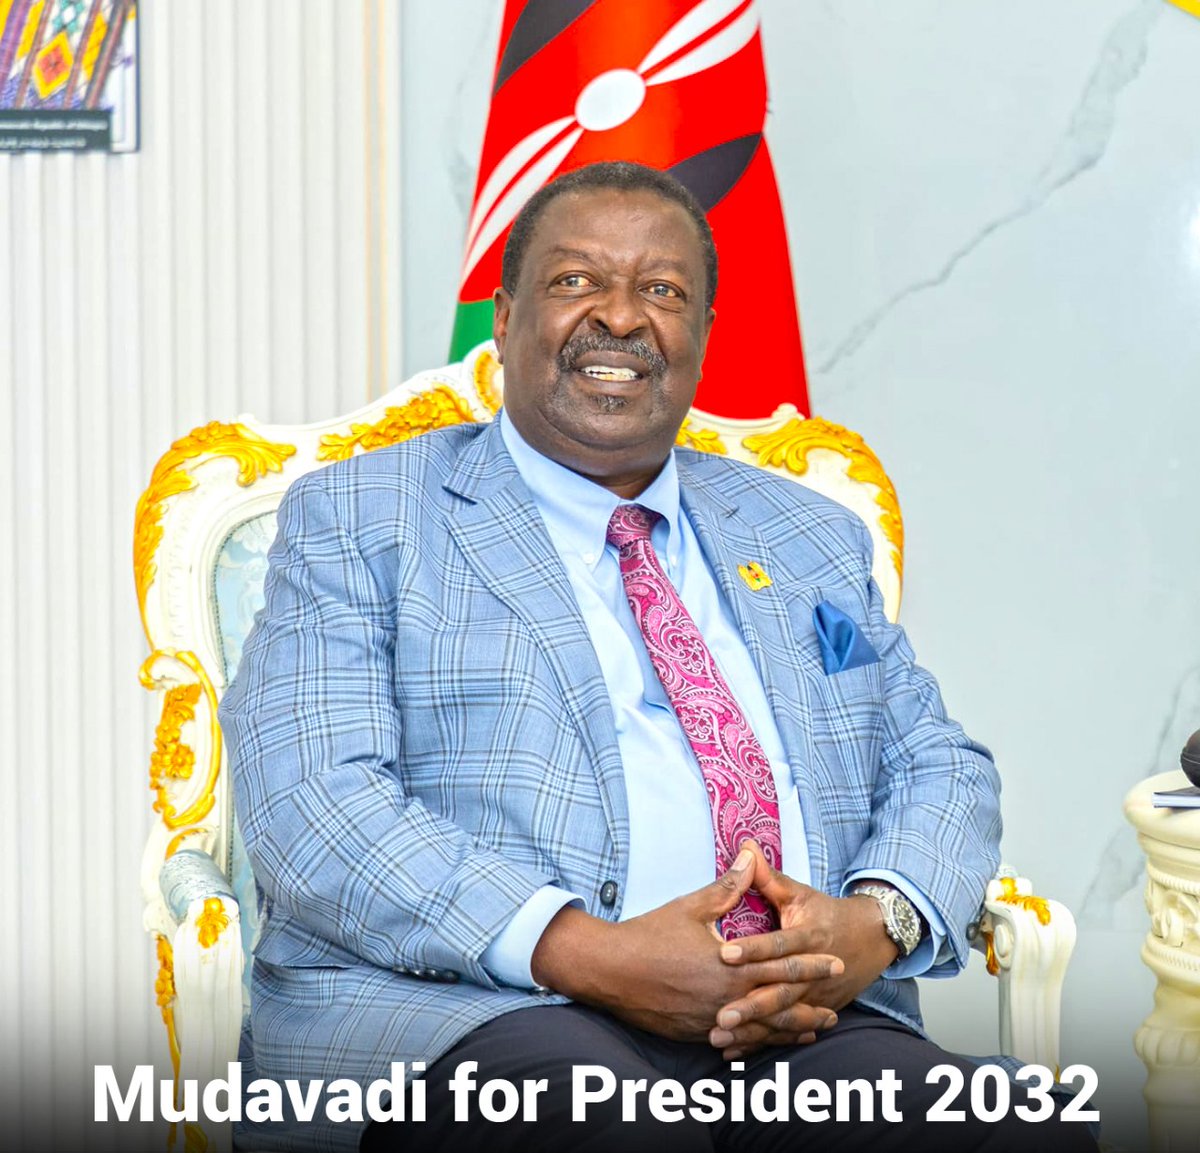 The solidarity of the Mulembe Nation today strongly endorses Musalia Mudavadi's presidential aspirations, reflecting our dedication to national progress.#AbaLuhya3 Mudavadi 2032 Mulembe Declaration